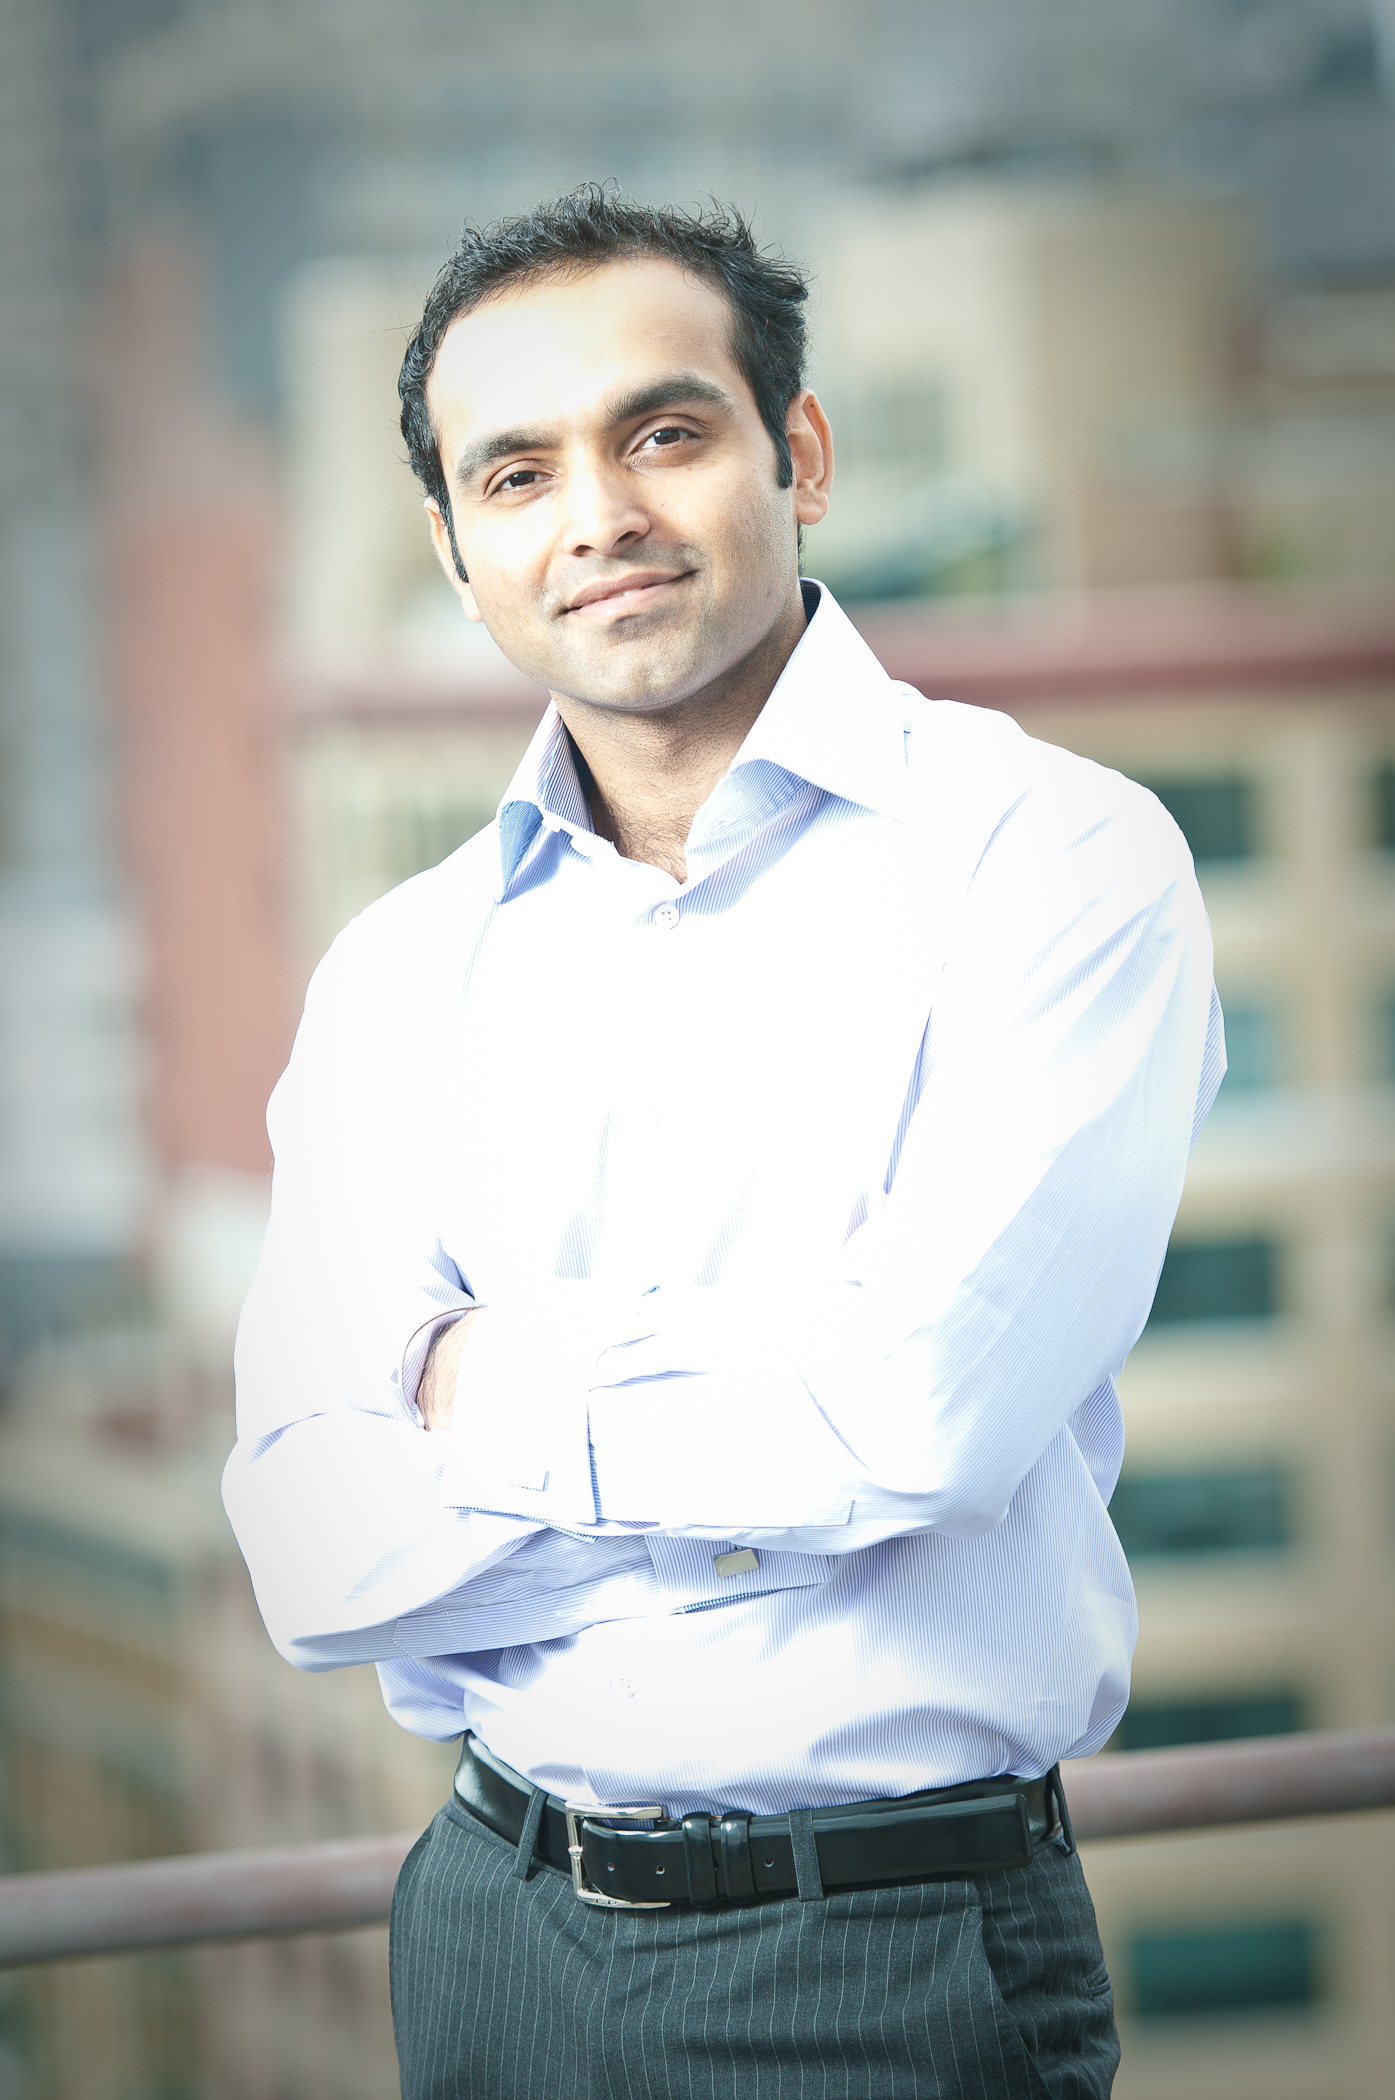 Employee Benefits News has named Kashable Co-Founder Rishi Kumar, a Top 50 Technology Innovator.